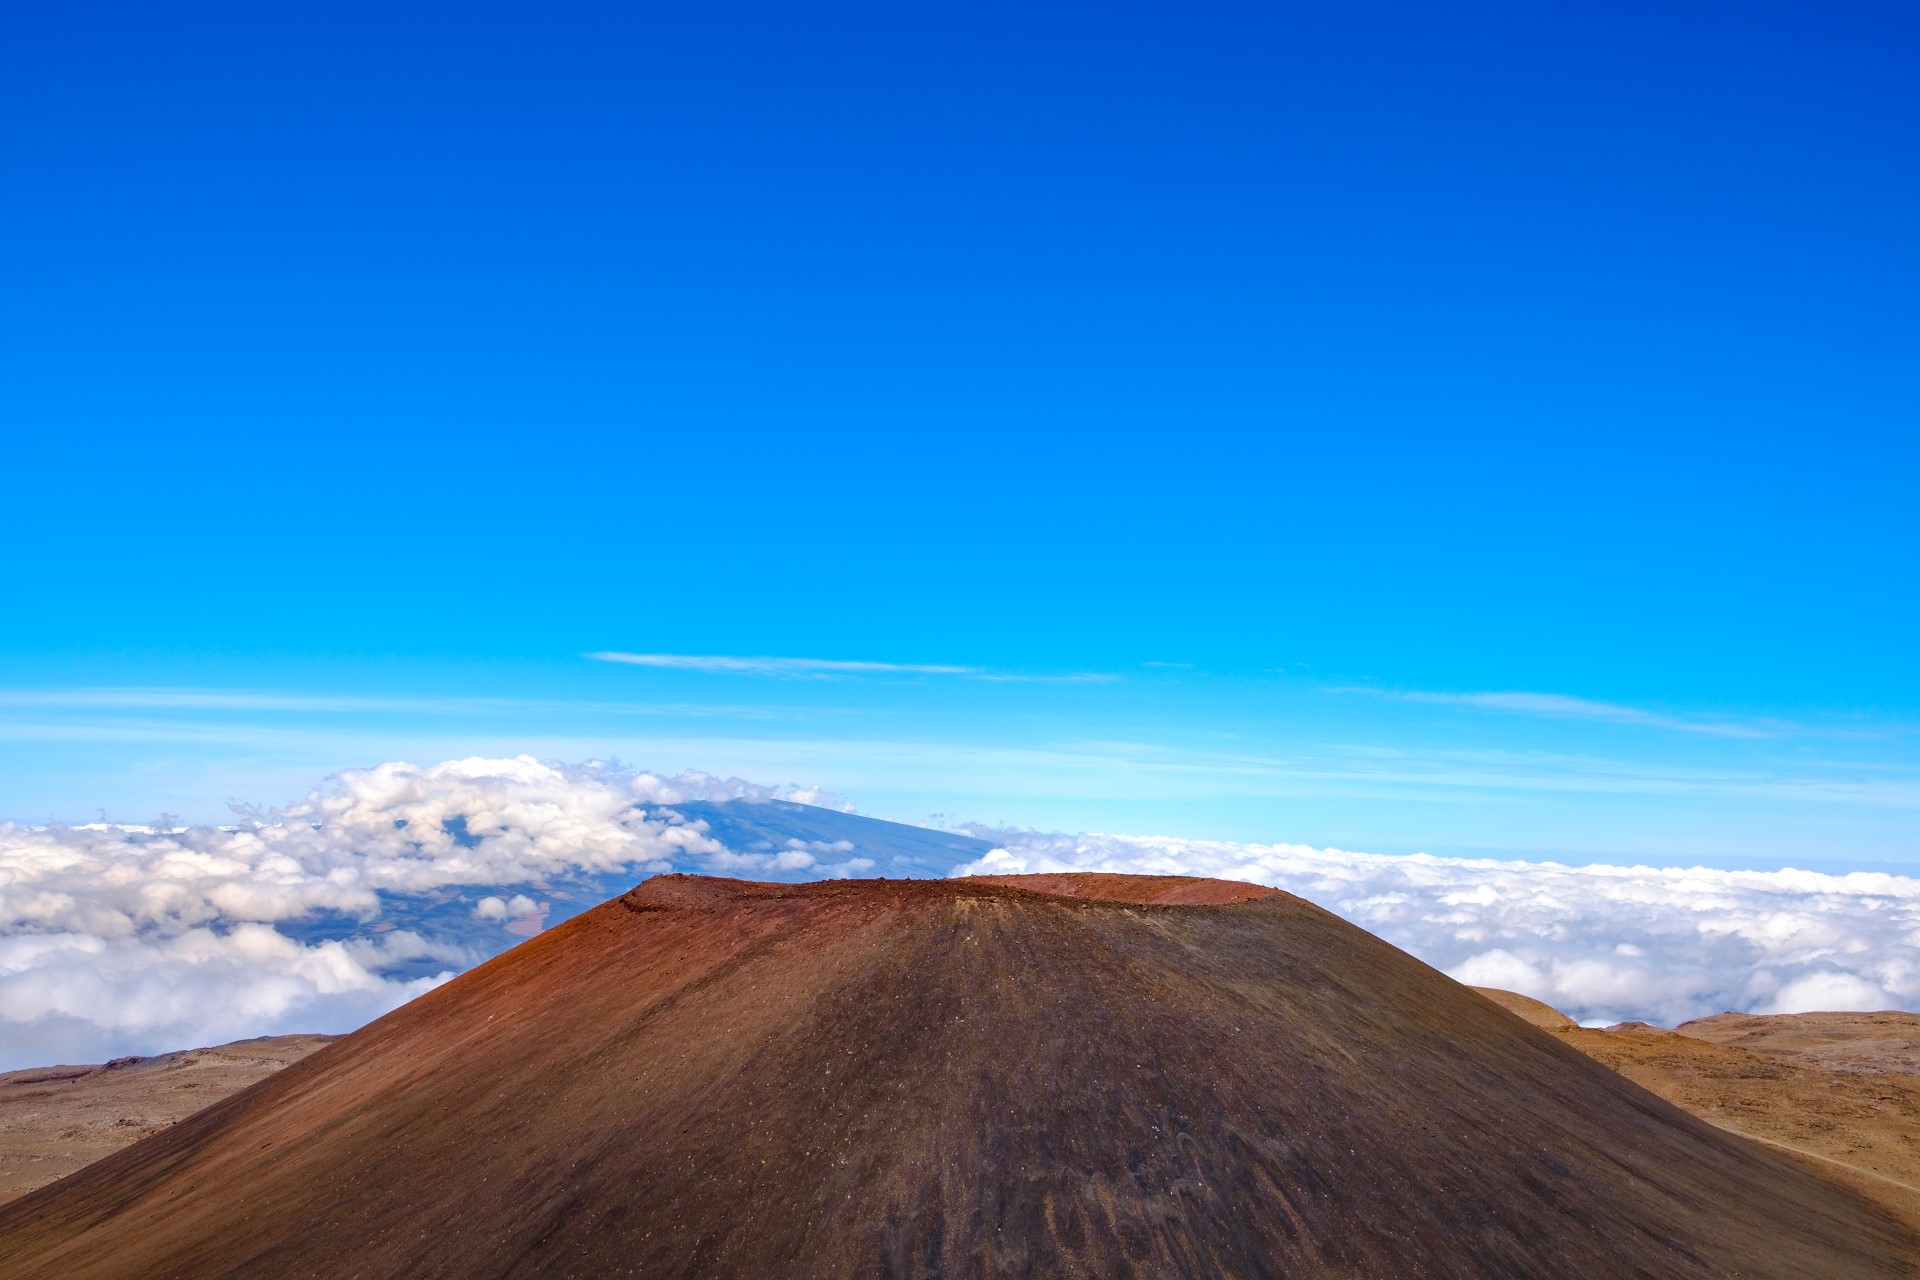 Vulkankrater Mauna Kea auf Hawaii Island. Photo Credit: MartinM303